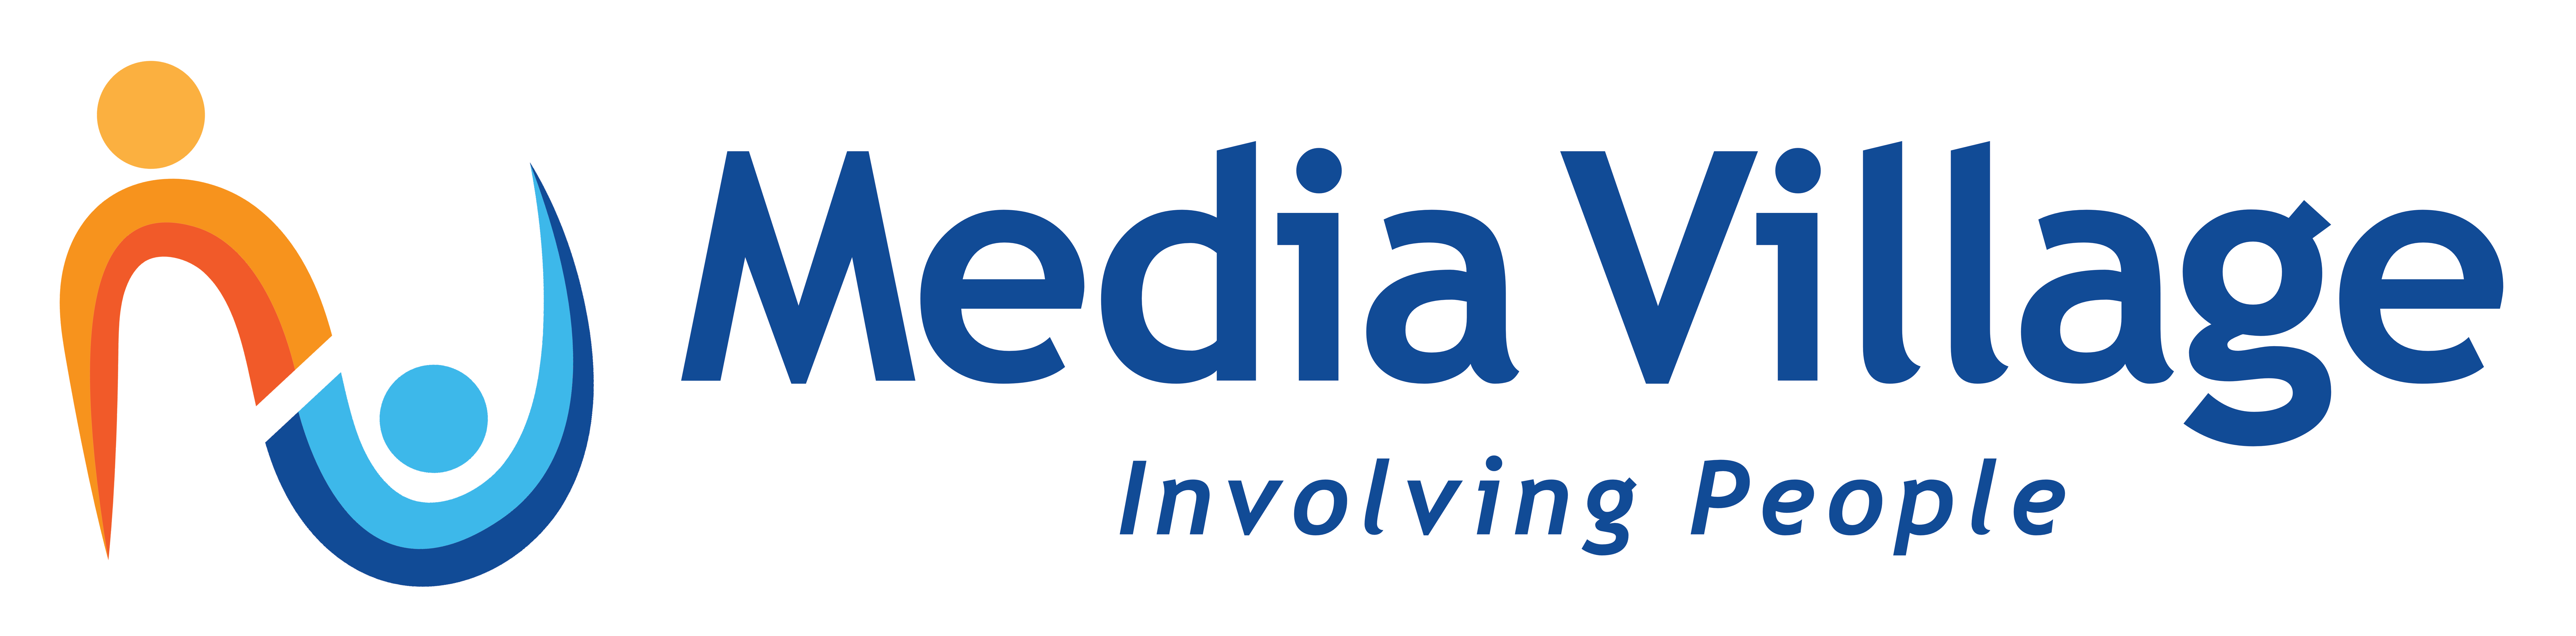 Logo mediavillage alone